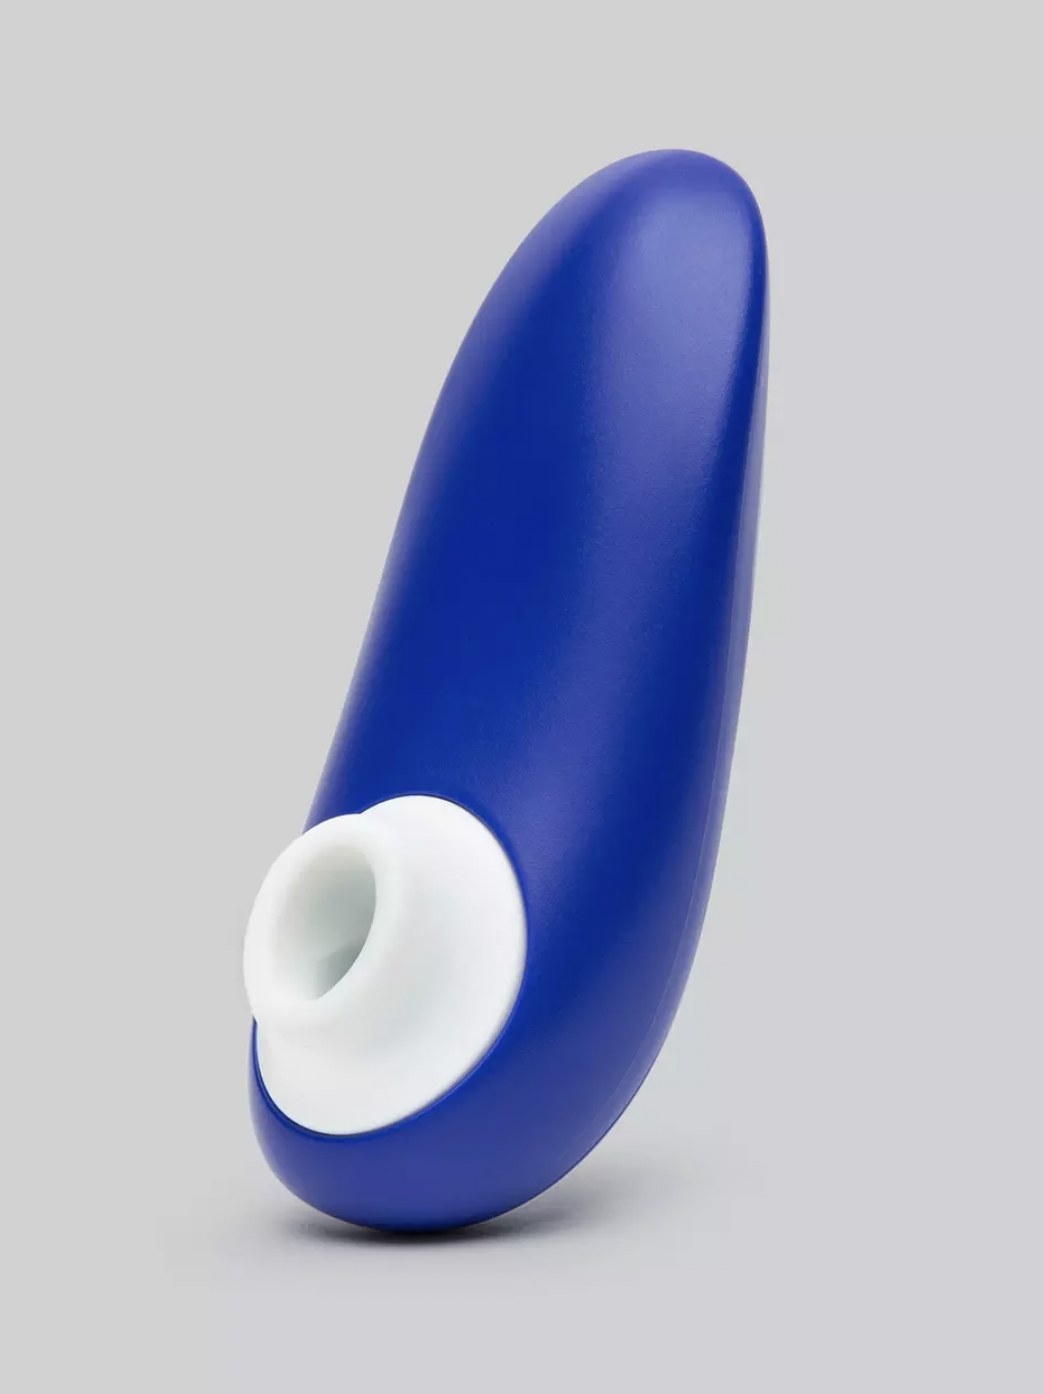 The blue clitoral suction stimulator